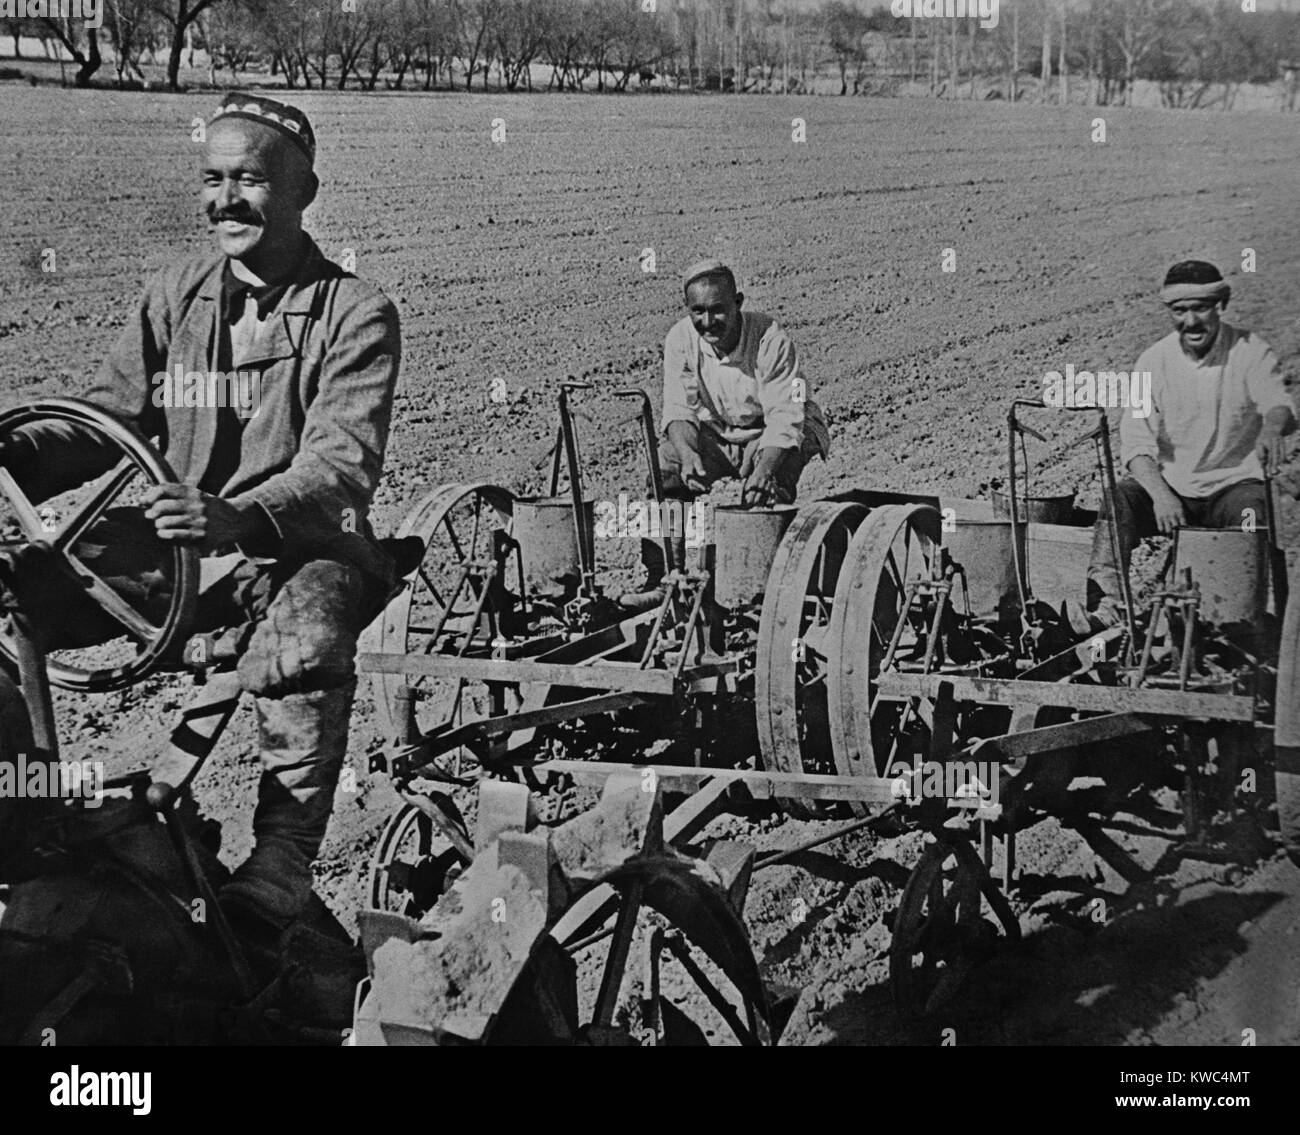 Planting cotton on the Navai collective farm, near Tashkent, Uzbekistan, USSR. Ca. 1935-40. (BSLOC_2015_2_257) Stock Photo